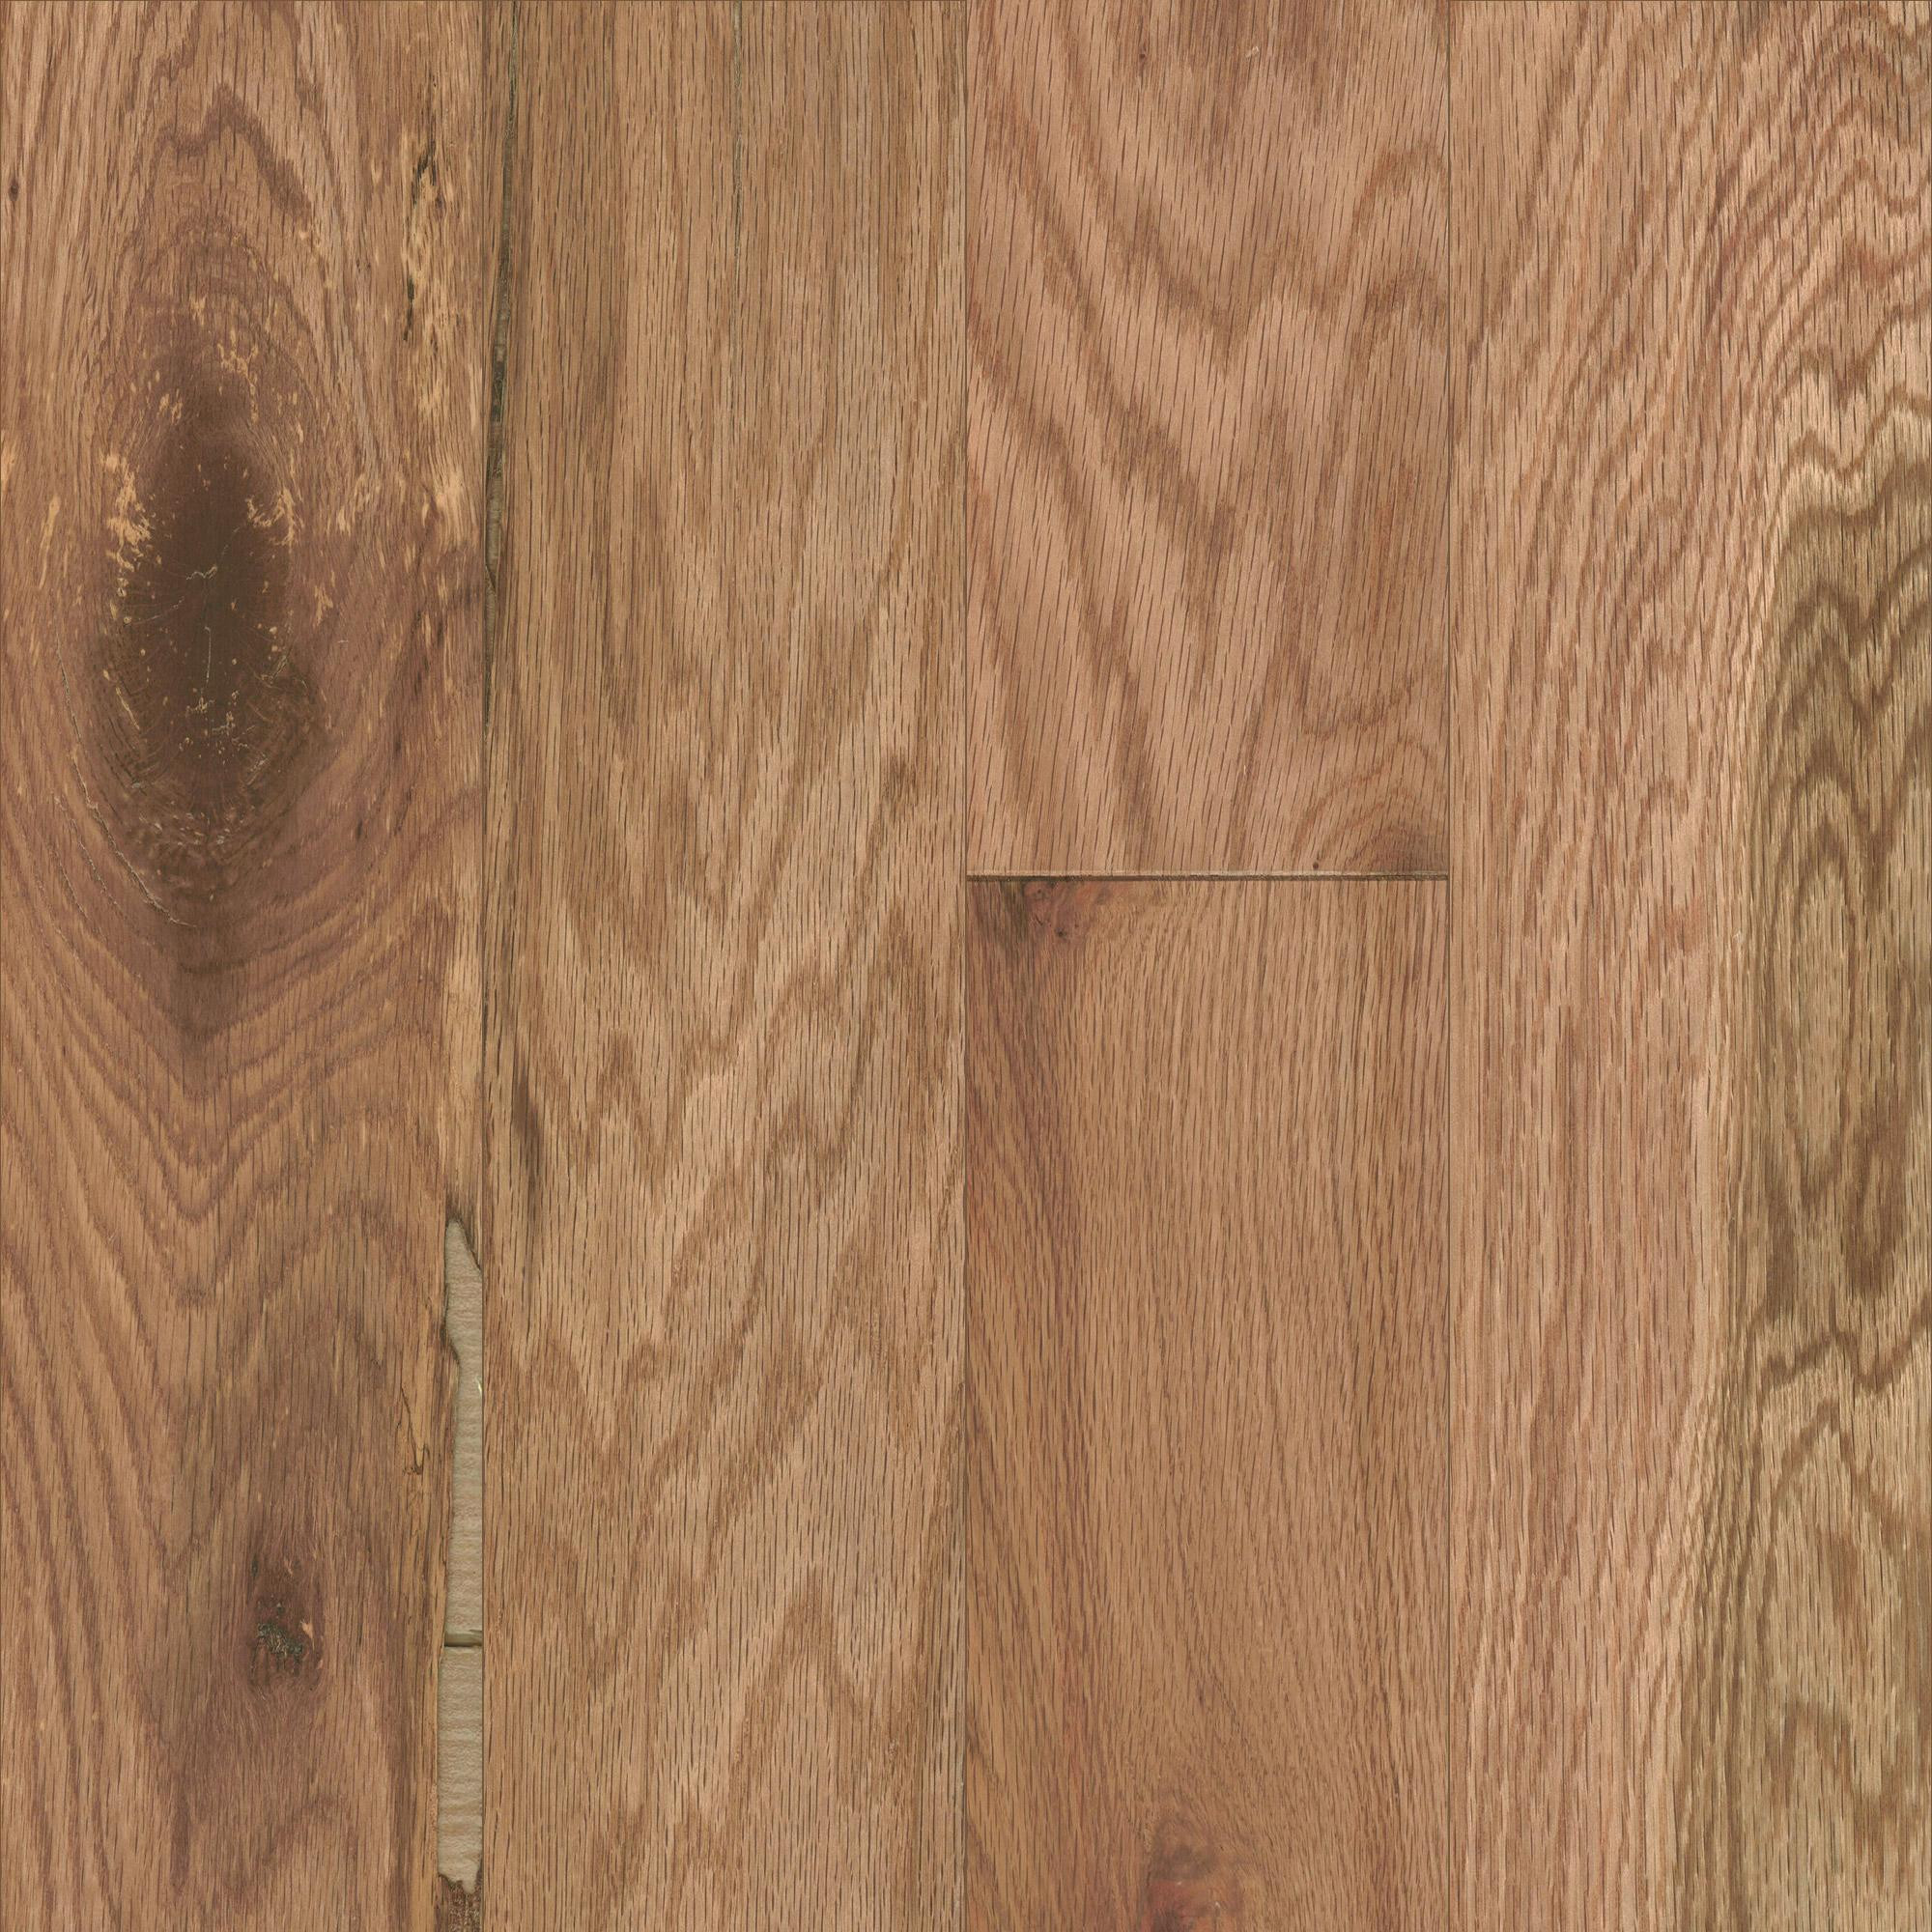 20 Perfect 2 Oak Hardwood Flooring 2024 free download 2 oak hardwood flooring of mullican ridgecrest red oak natural 1 2 thick 5 wide engineered in mullican ridgecrest red oak natural 1 2 thick 5 wide engineered hardwood flooring